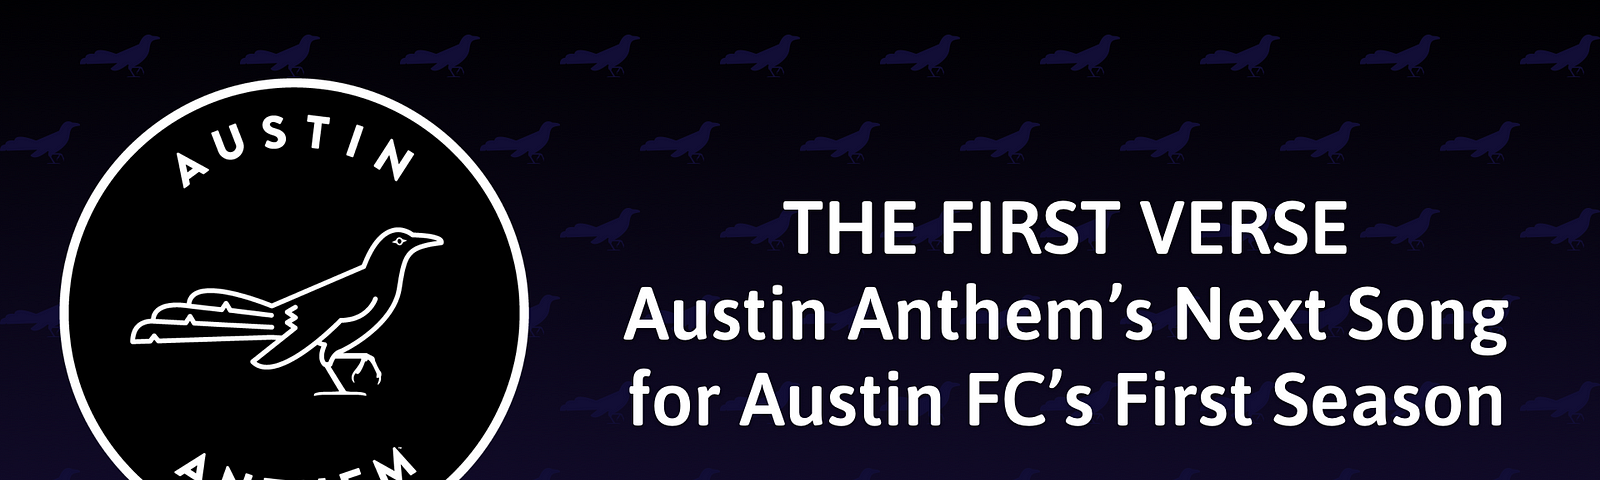 Austin Anthem’s Next Song for Austin FC’s First Season